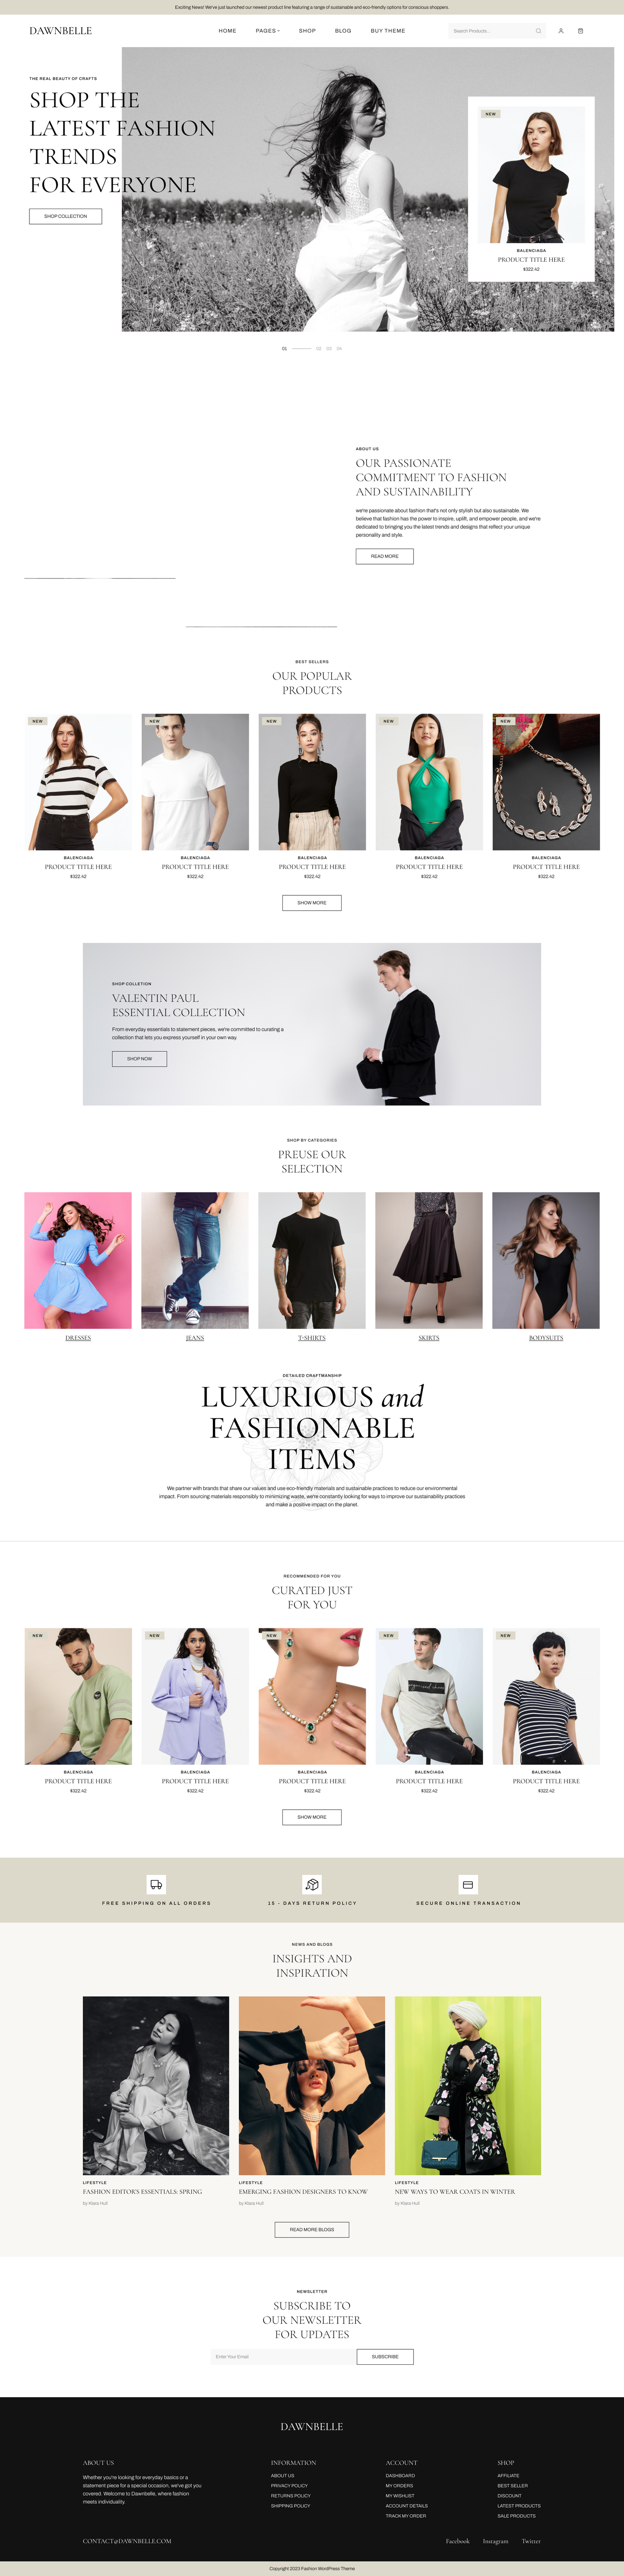 Fashion Stylist WordPress Theme